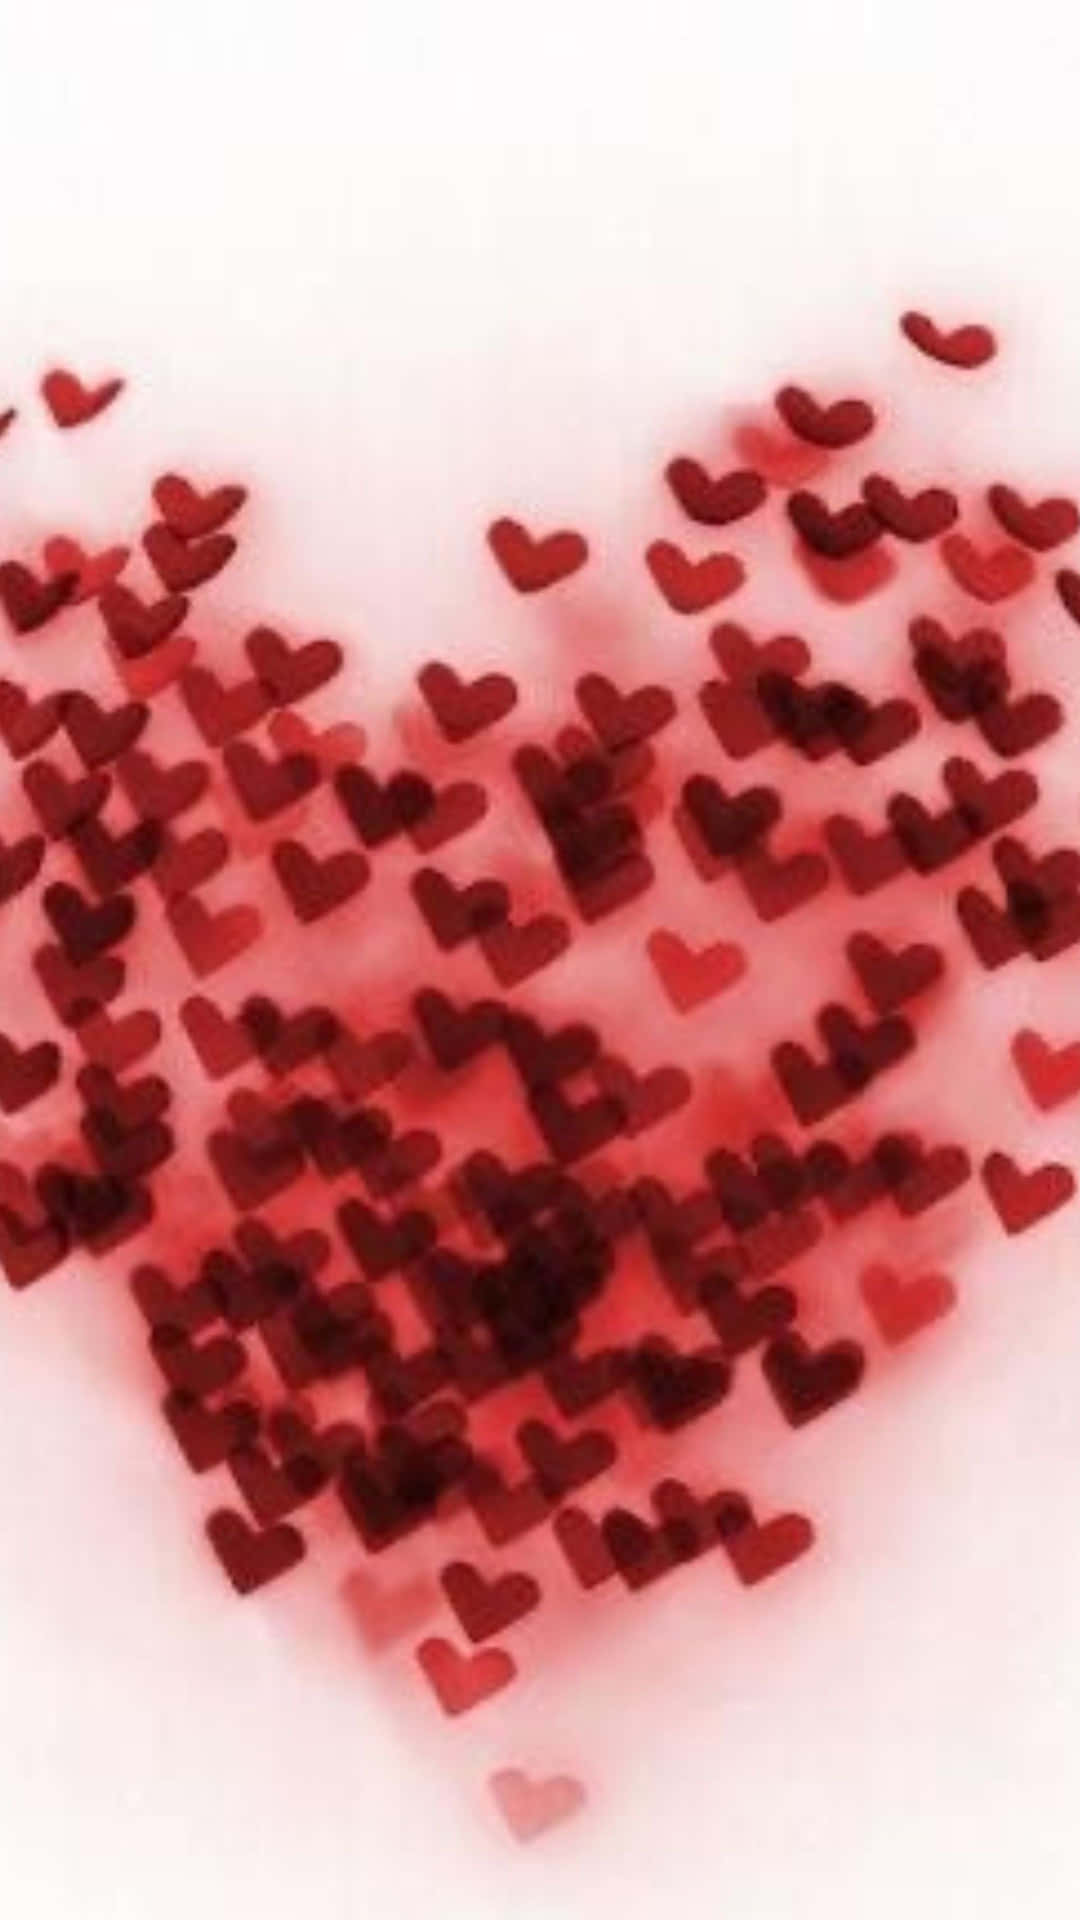 a heart shaped heart with many red hearts